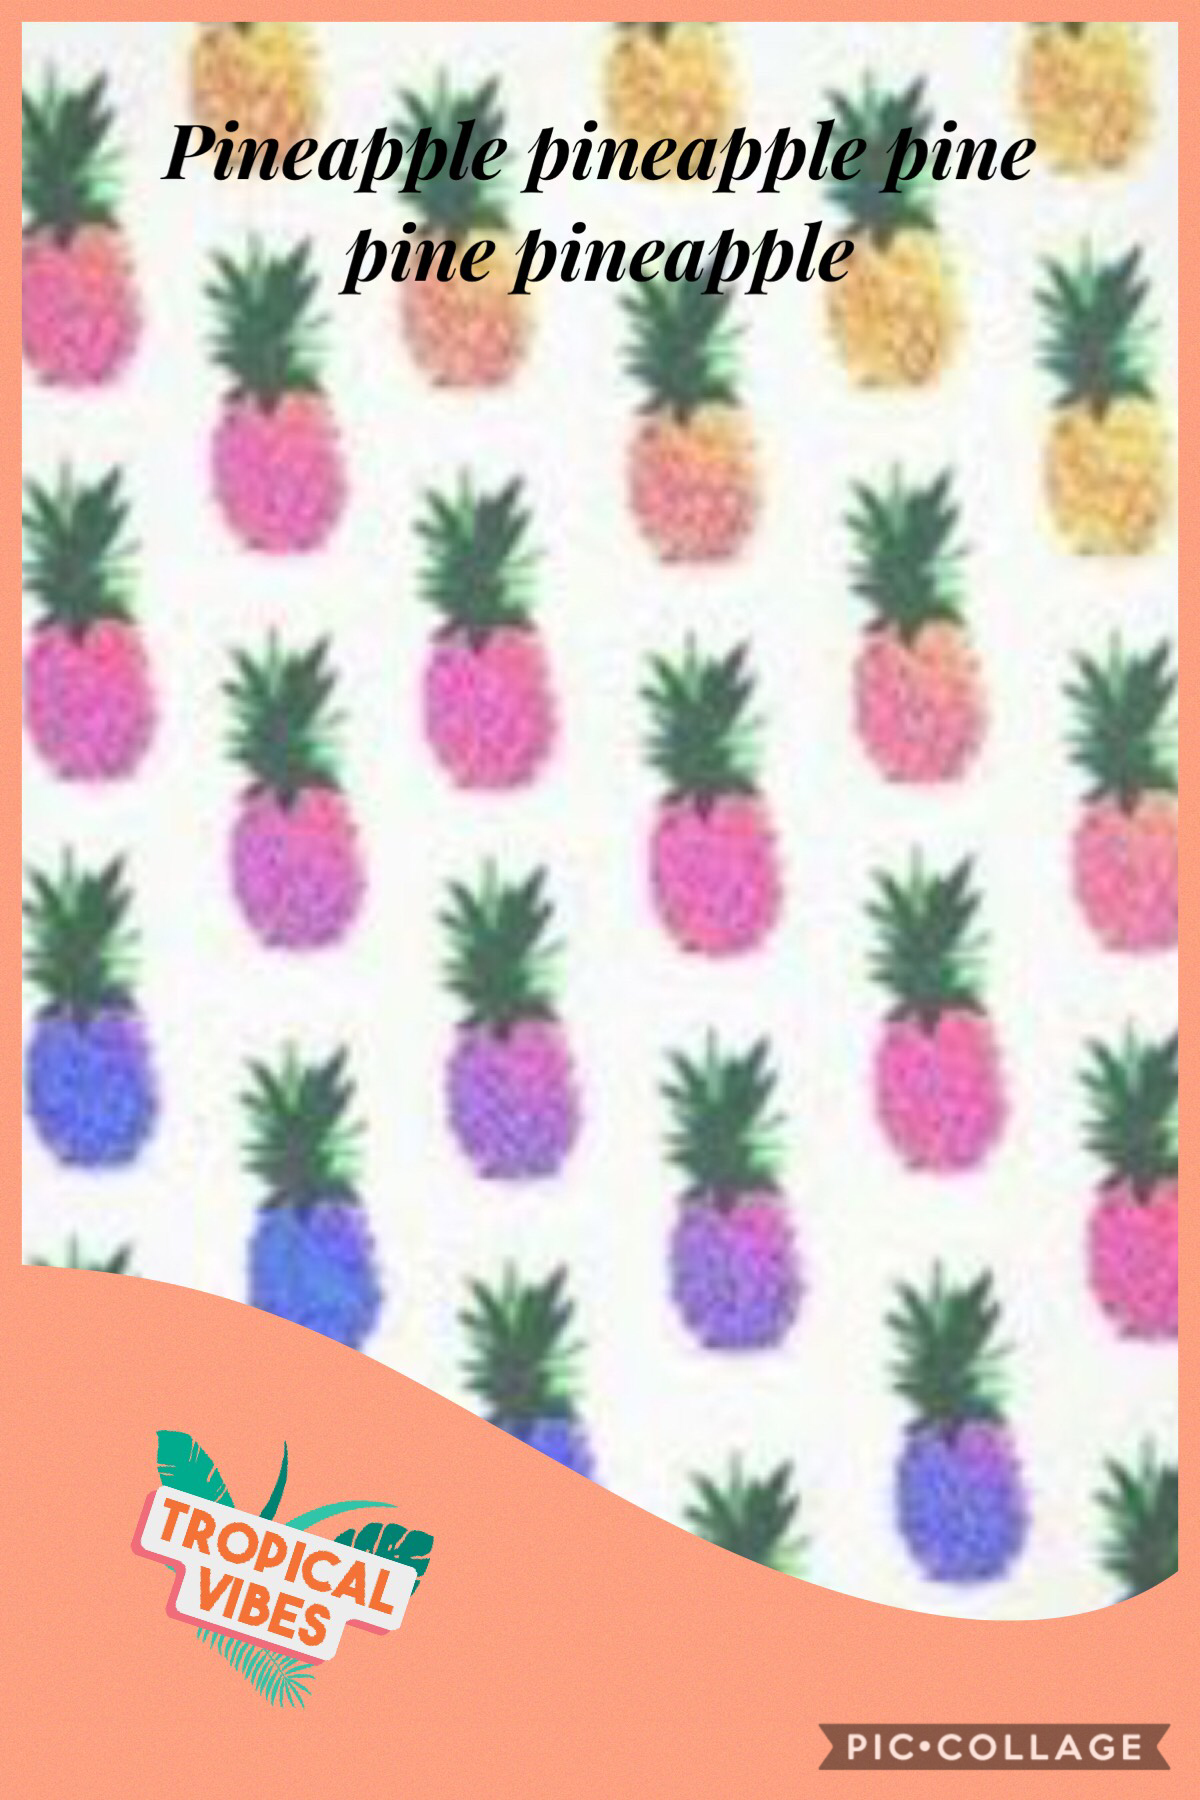 Pineapple 😂❤️🍍